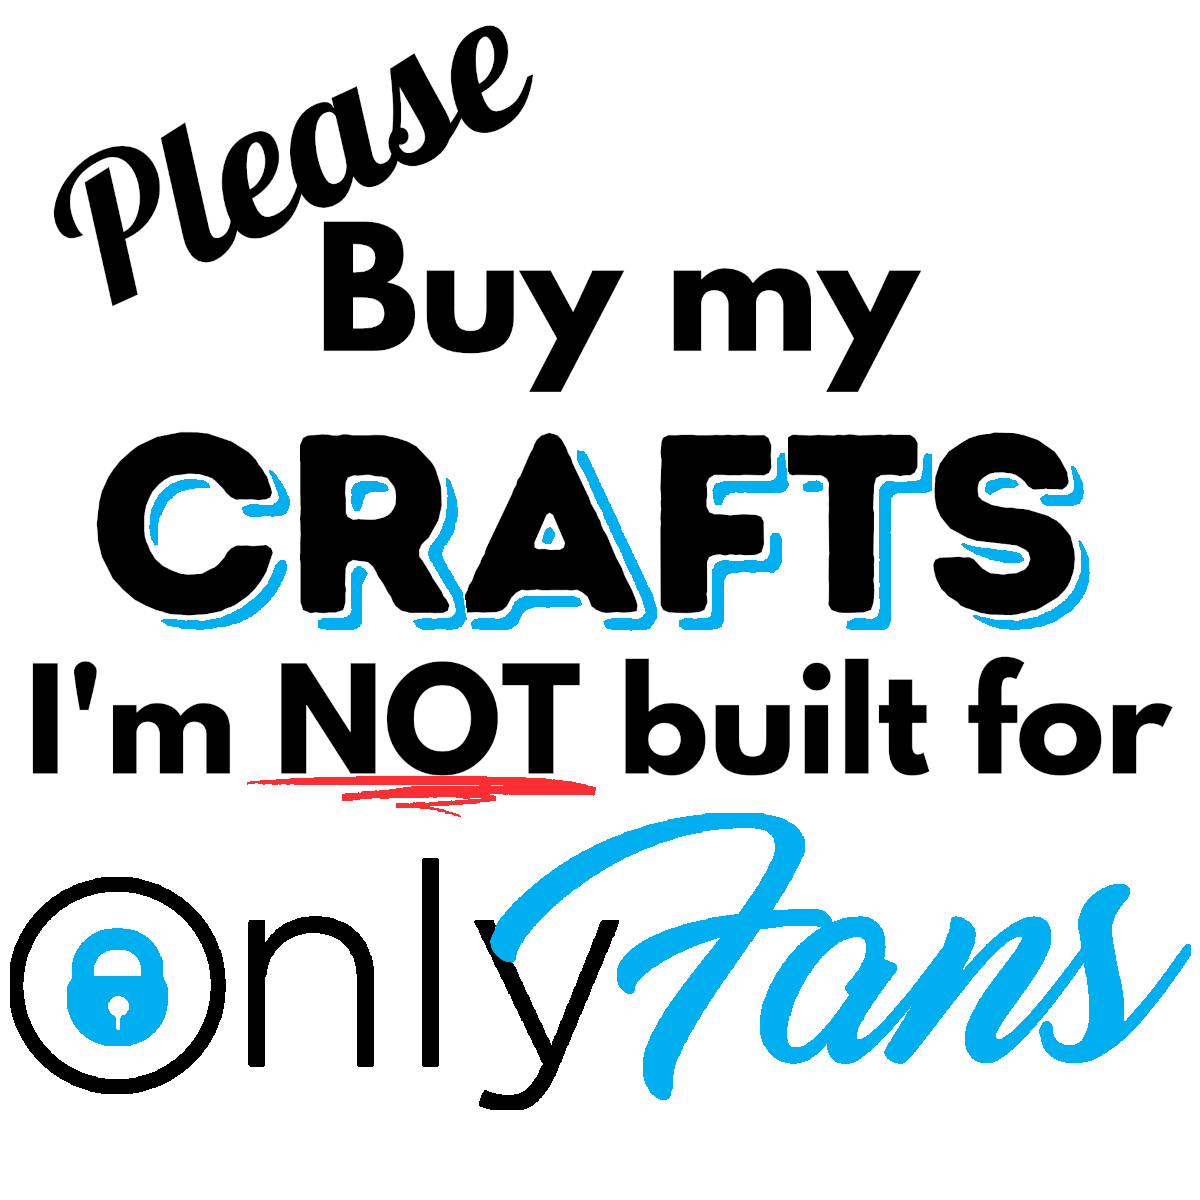 Buy My Crafts